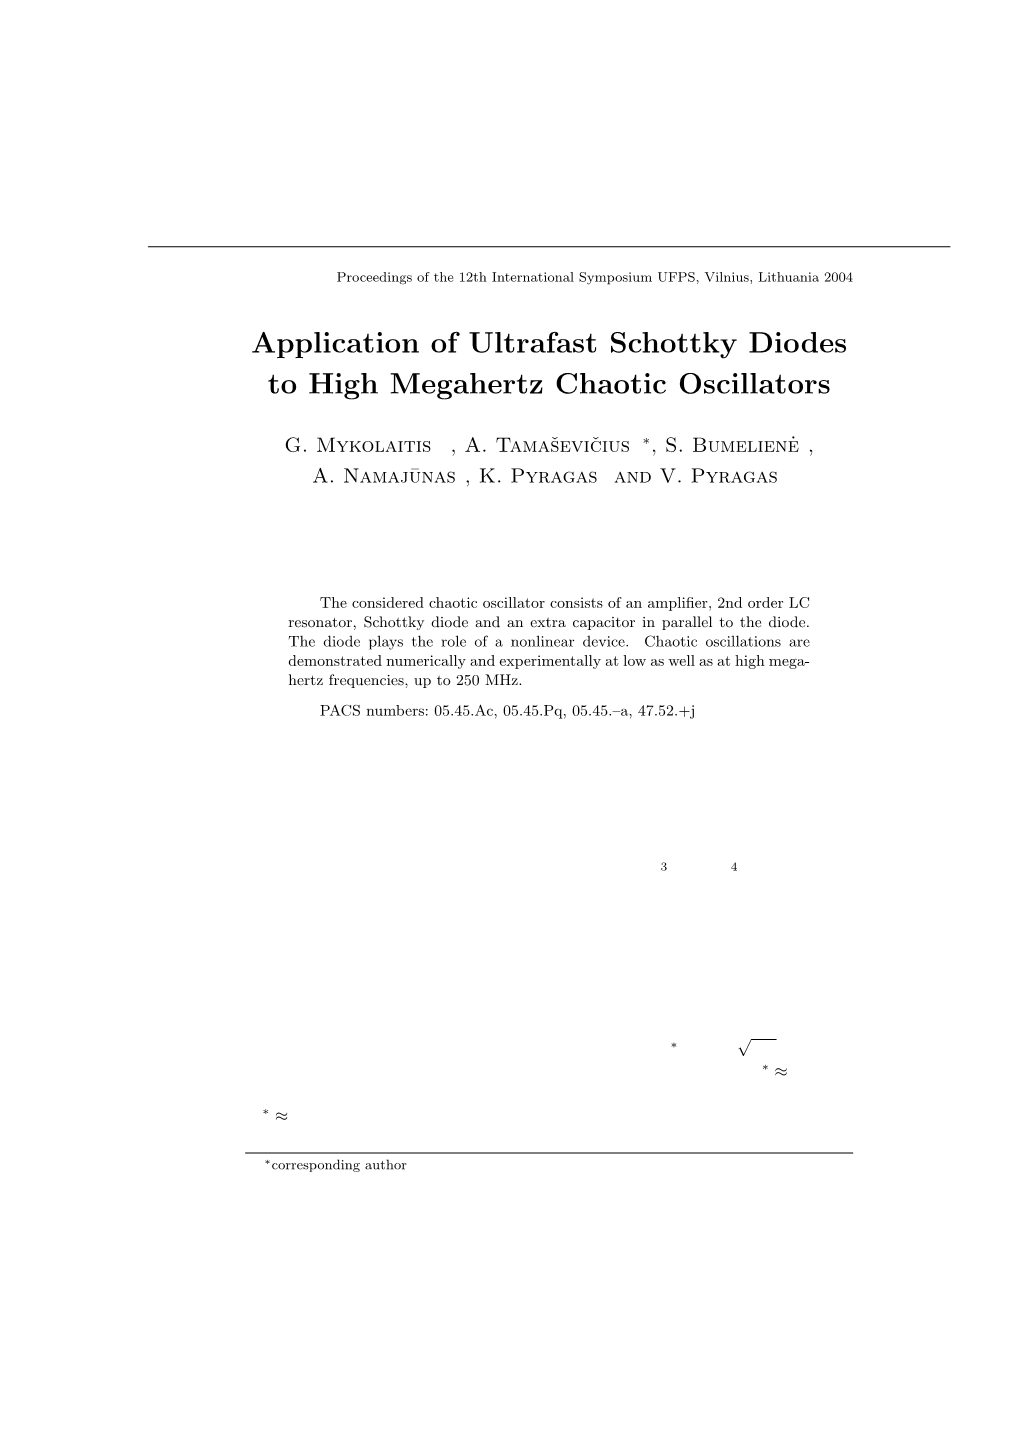 Application of Ultrafast Schottky Diodes to High Megahertz Chaotic Oscillators